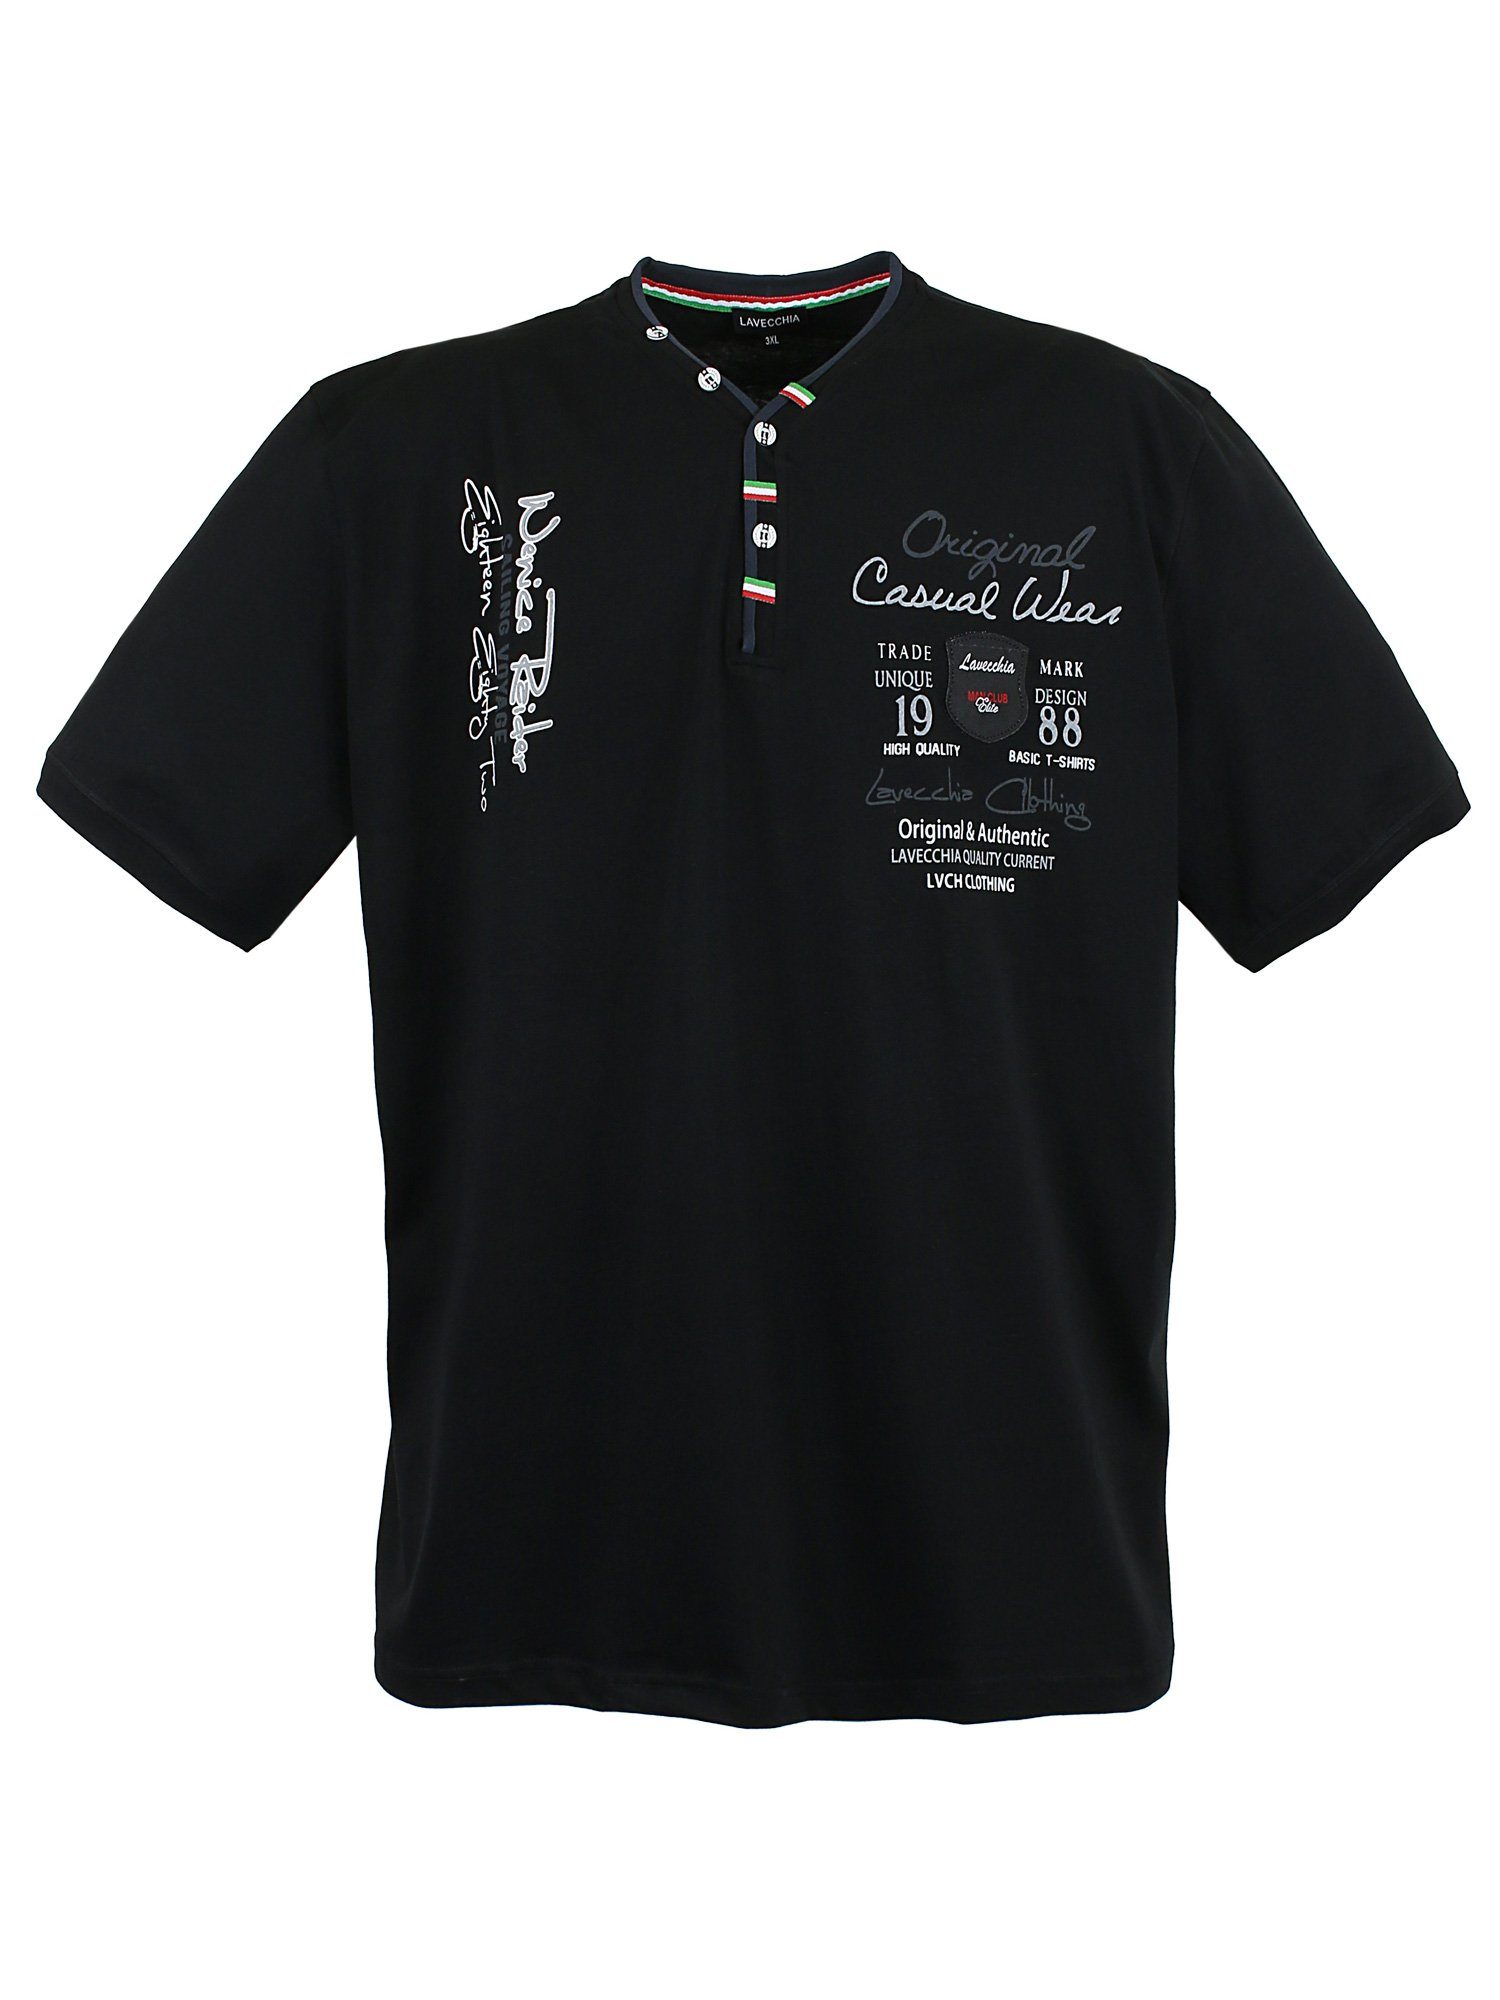 Lavecchia T-Shirt Übergrößen Herren V-Shirt LV-2042 Herrenshirt V-Ausschnitt schwarz